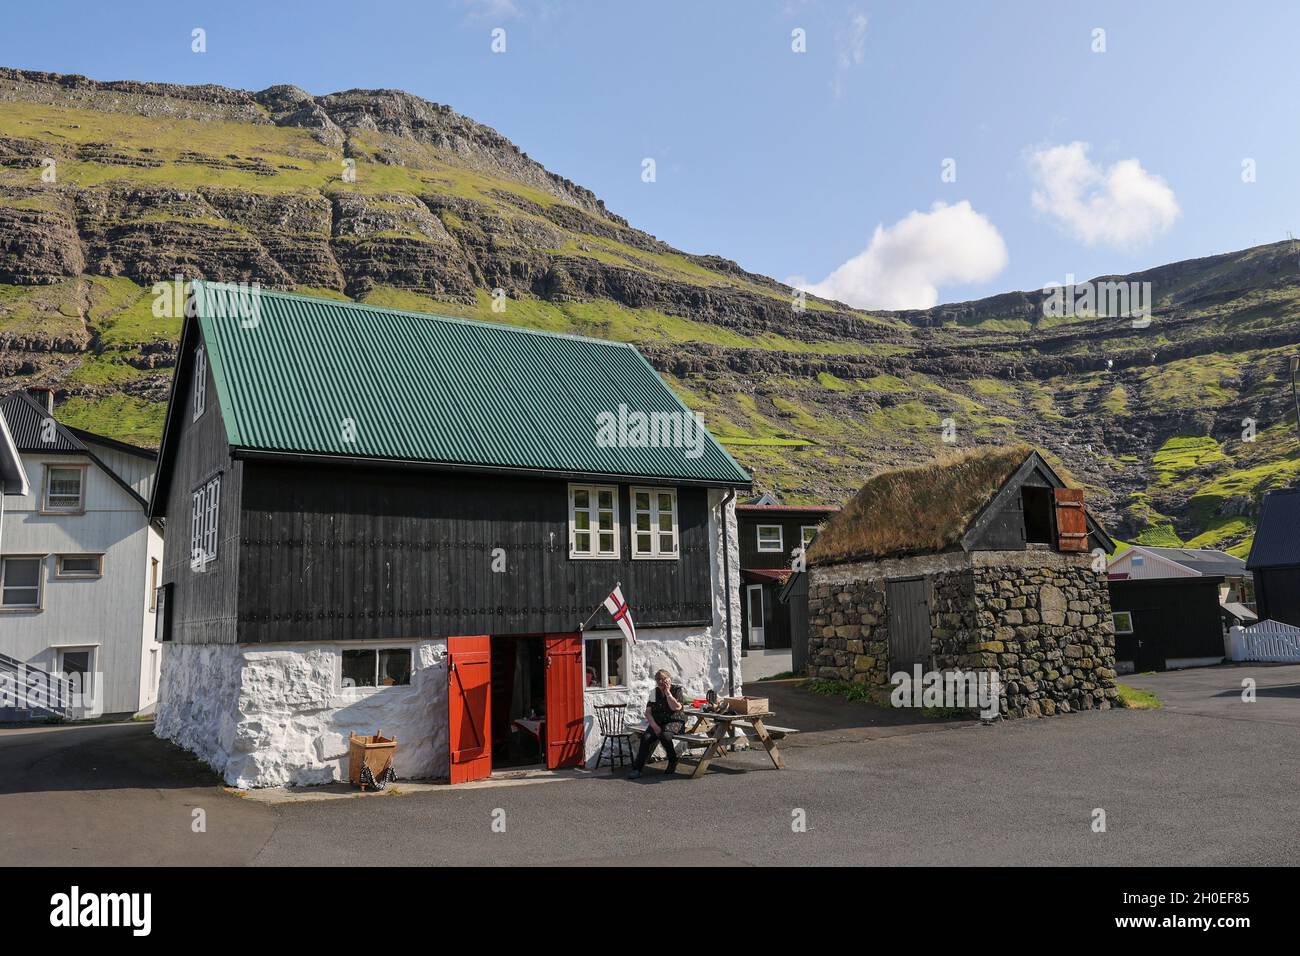 Traditional wooden house with a green tin roof in Tjornuvik, Streymoy Island, Faroe Islands,Scandinavia,Europe. Stock Photo